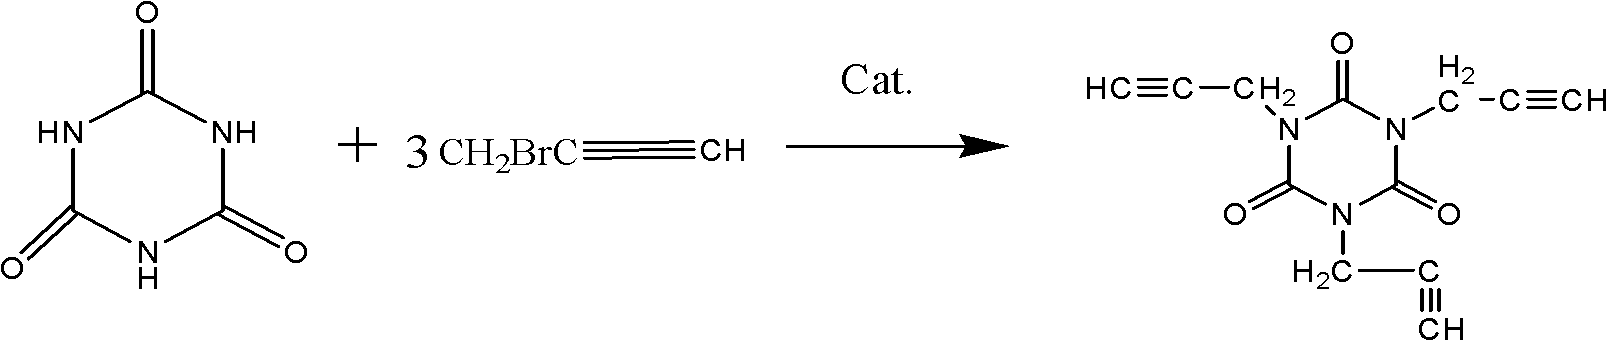 Synthesis method and application of trialkynyl monomer 1,3,5-tripropargyl-1,3,5-triazine-2,4,6-triketone